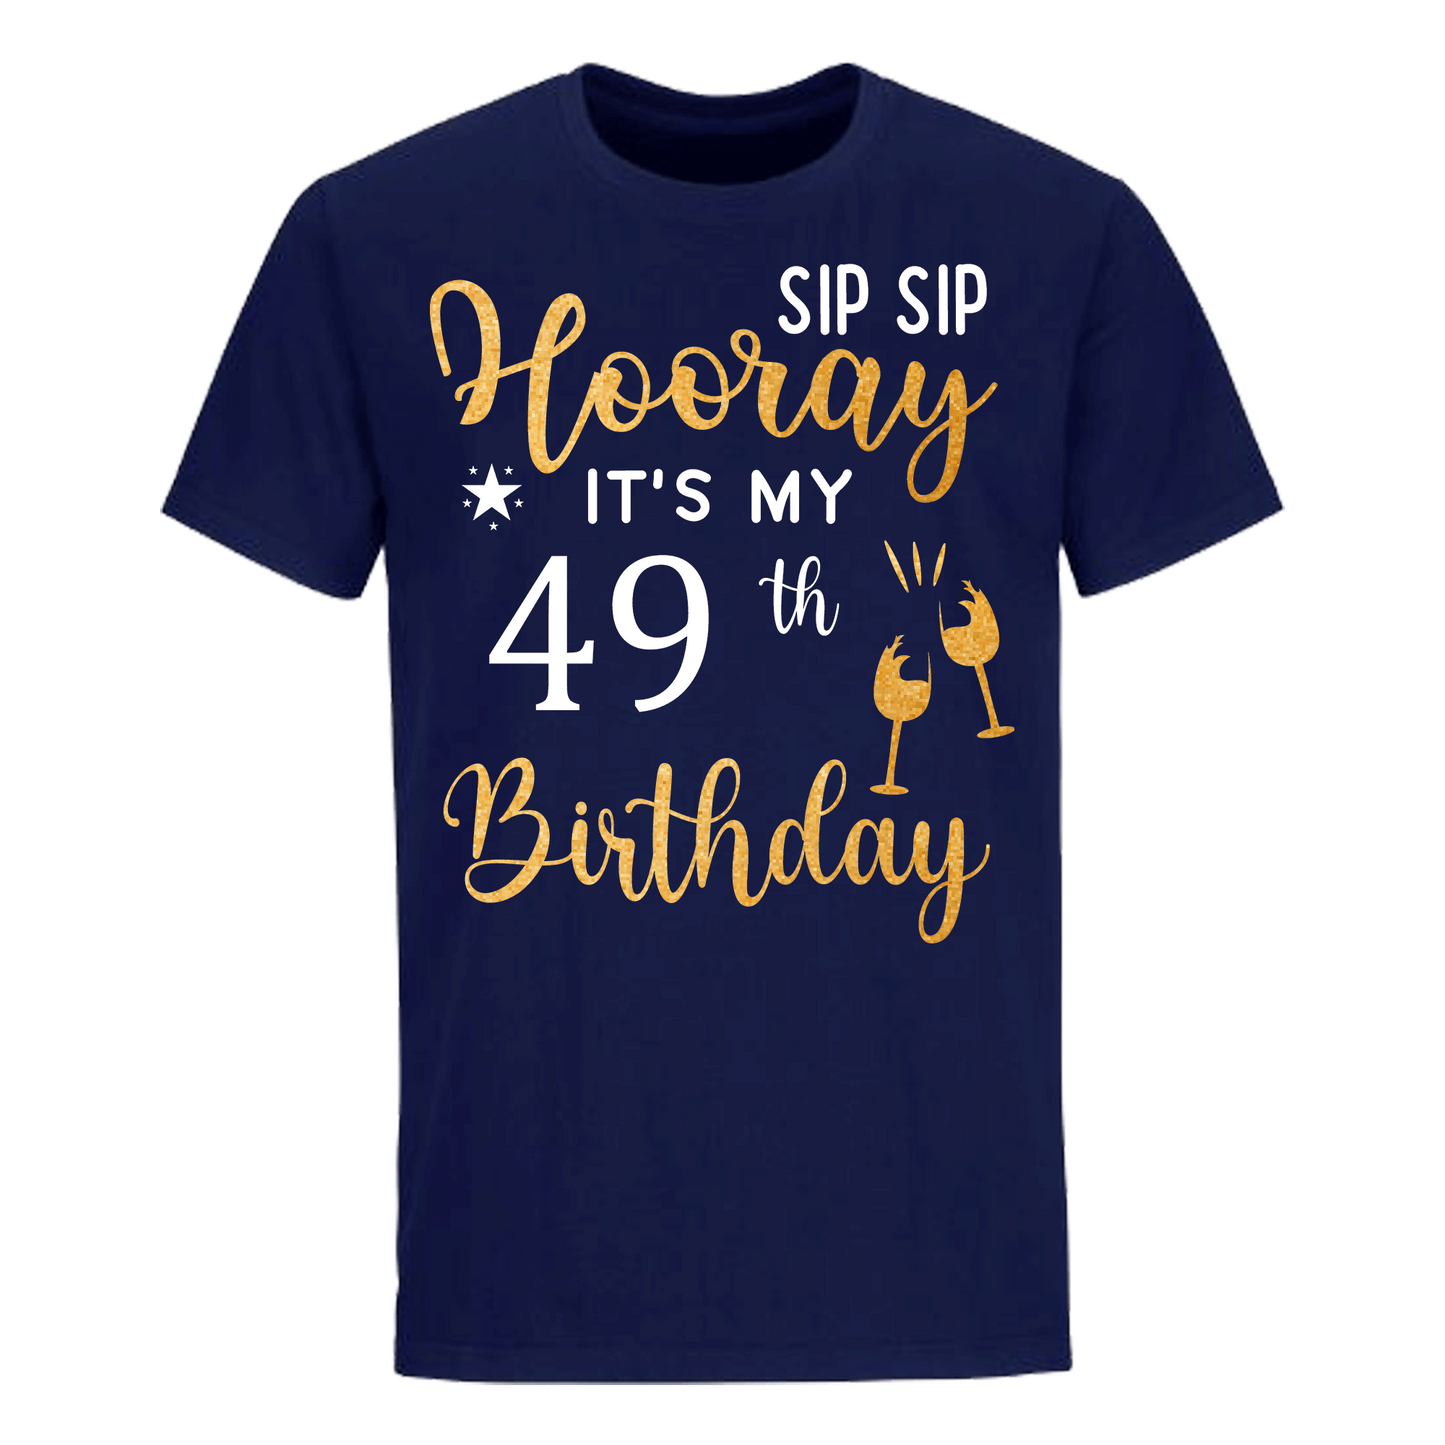 HOORAY IT'S MY 49th BIRTHDAY SHIRT